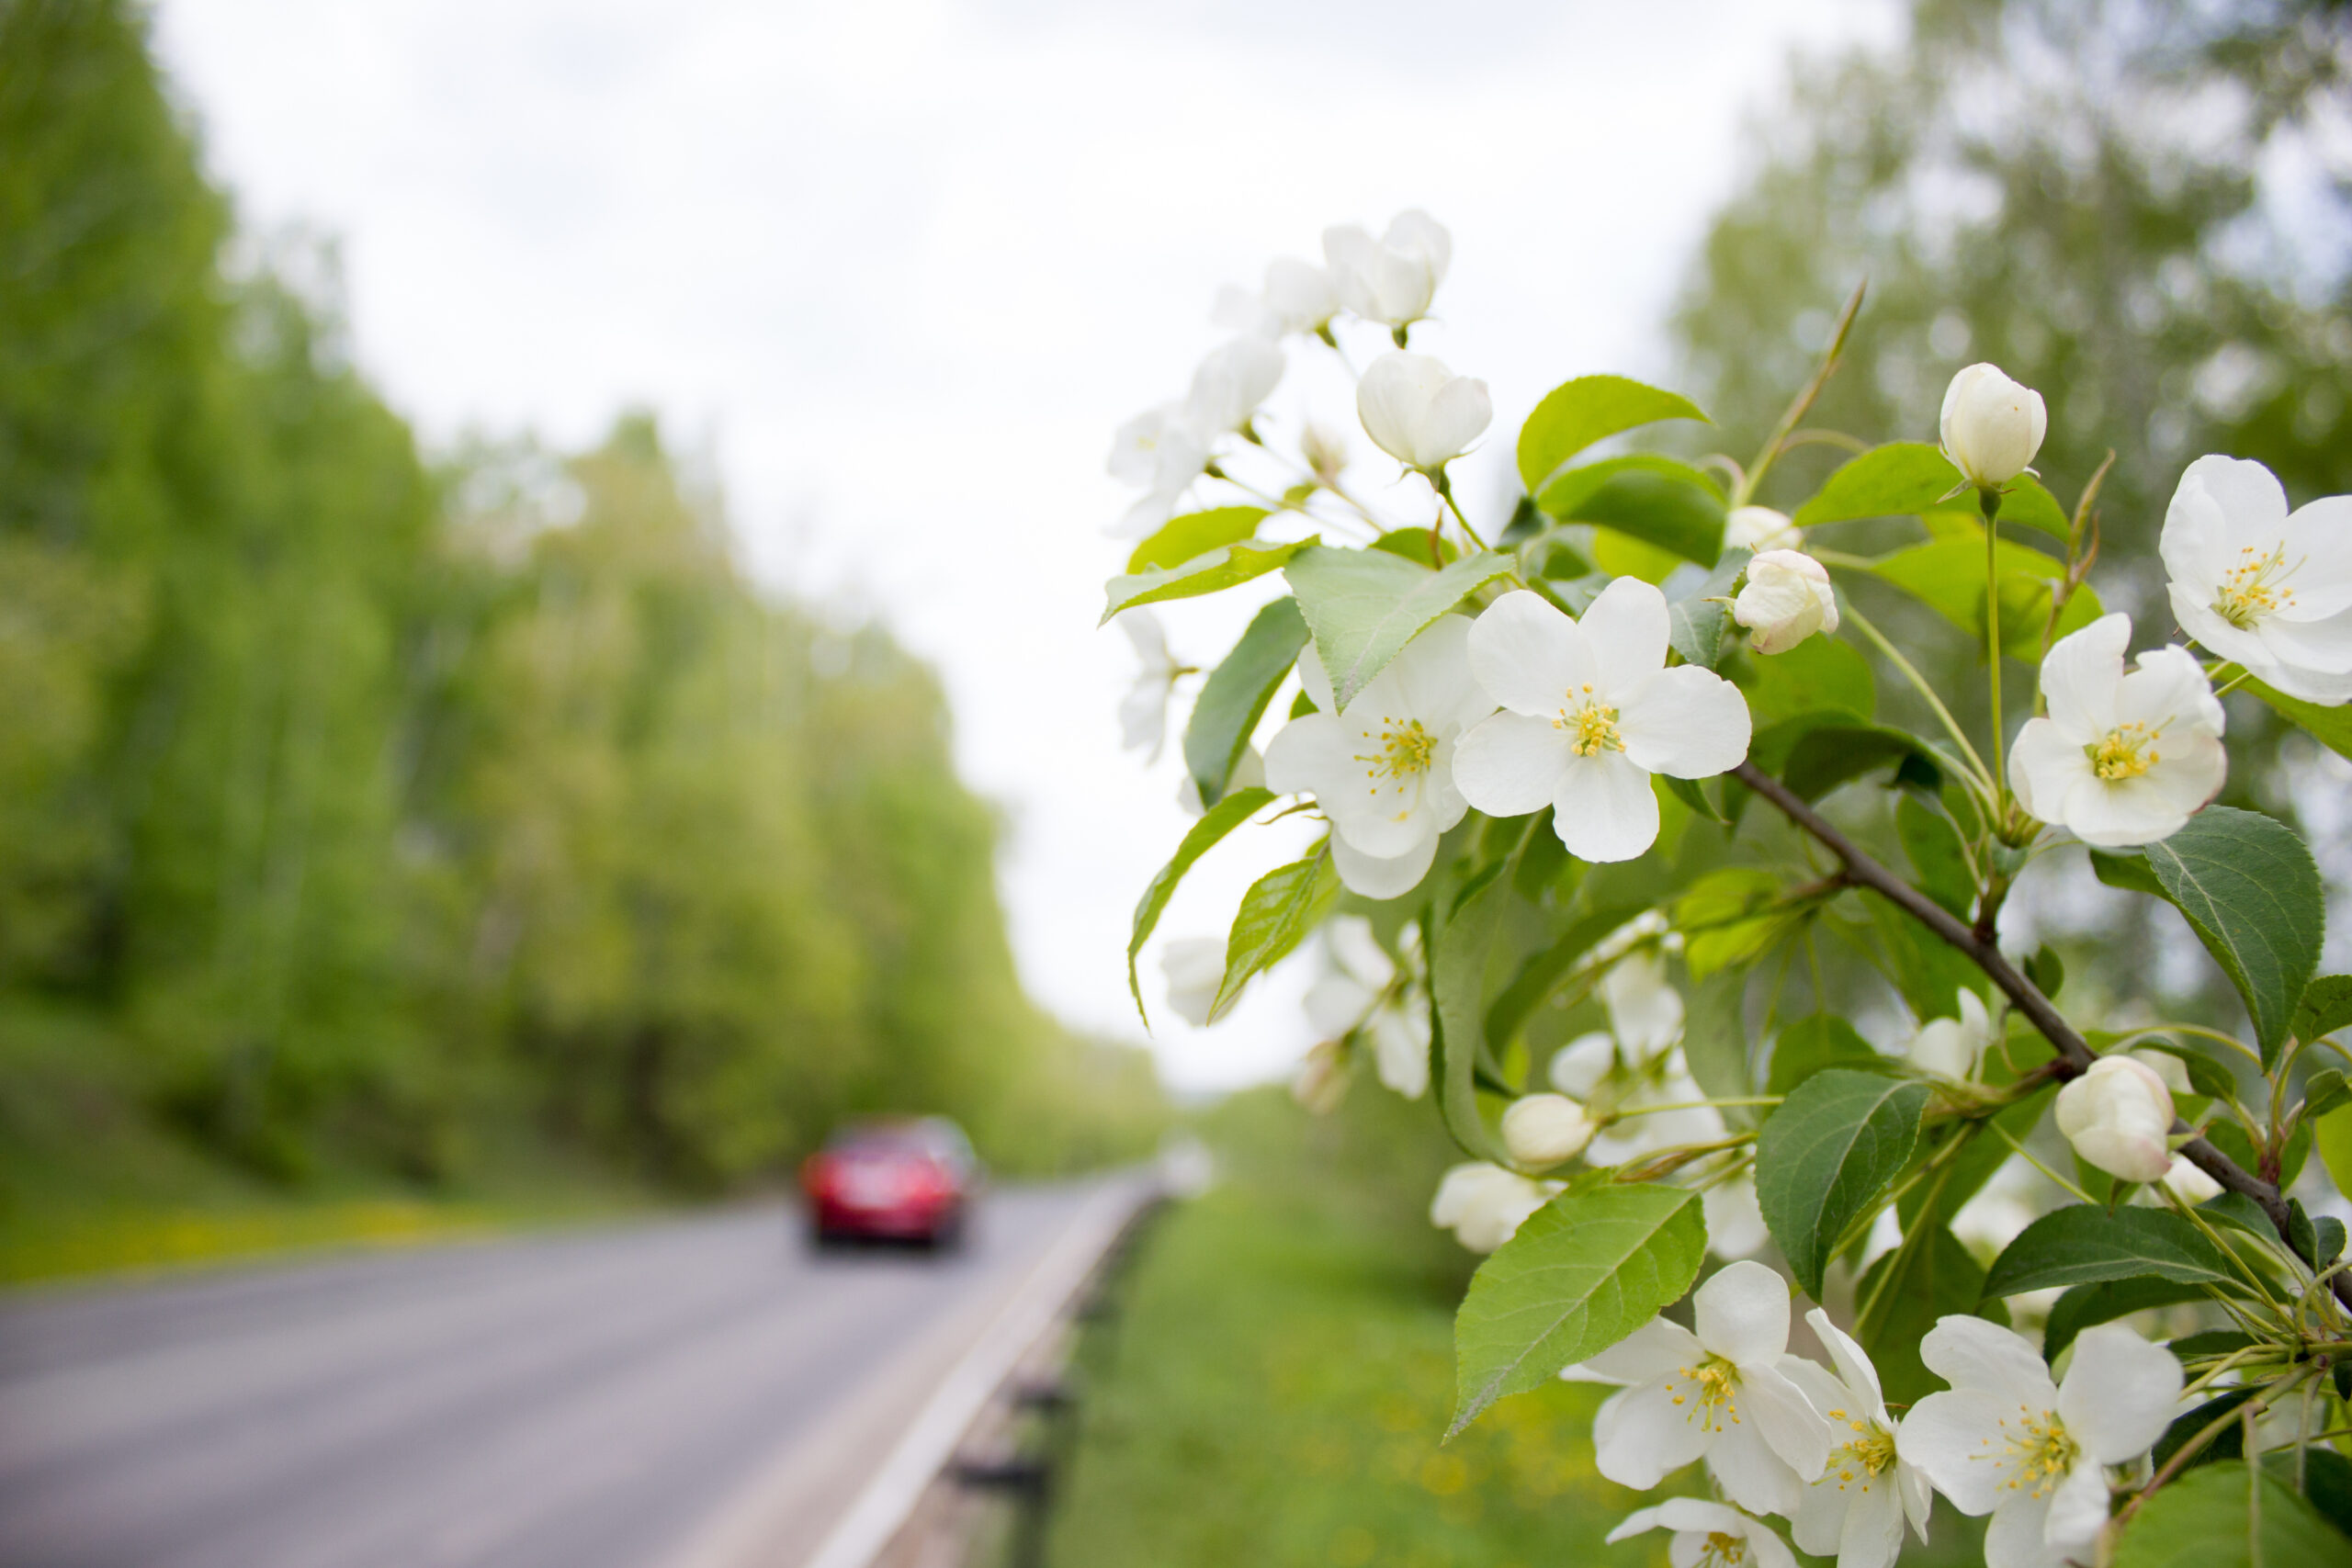 Spring road trip in Missouri, driving past freshly bloomed flowers